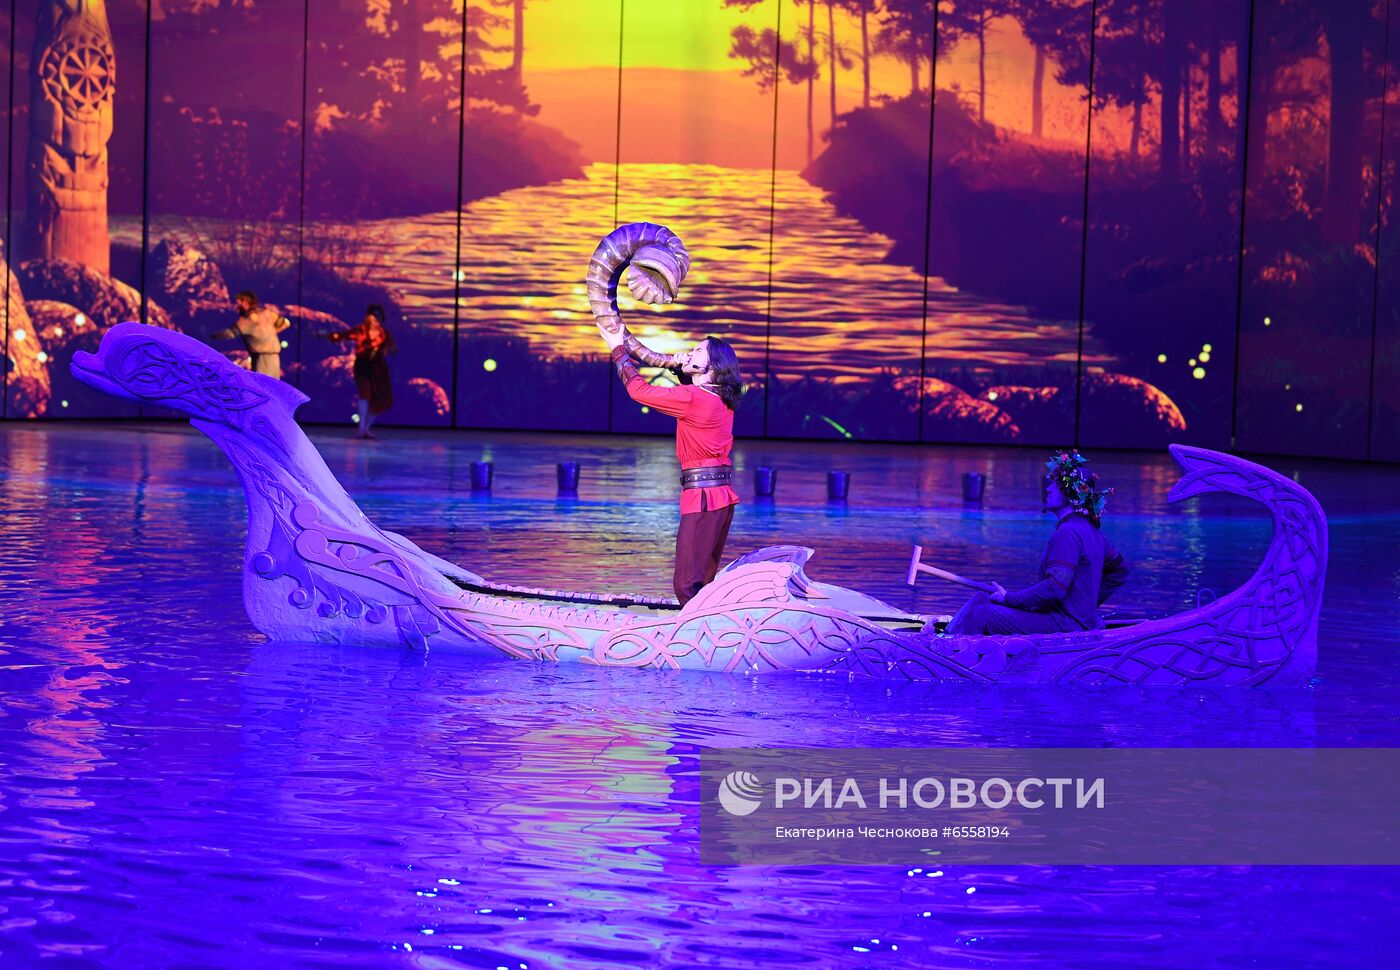 Презентация шоу "Сон в летнюю ночь" в Москвариуме